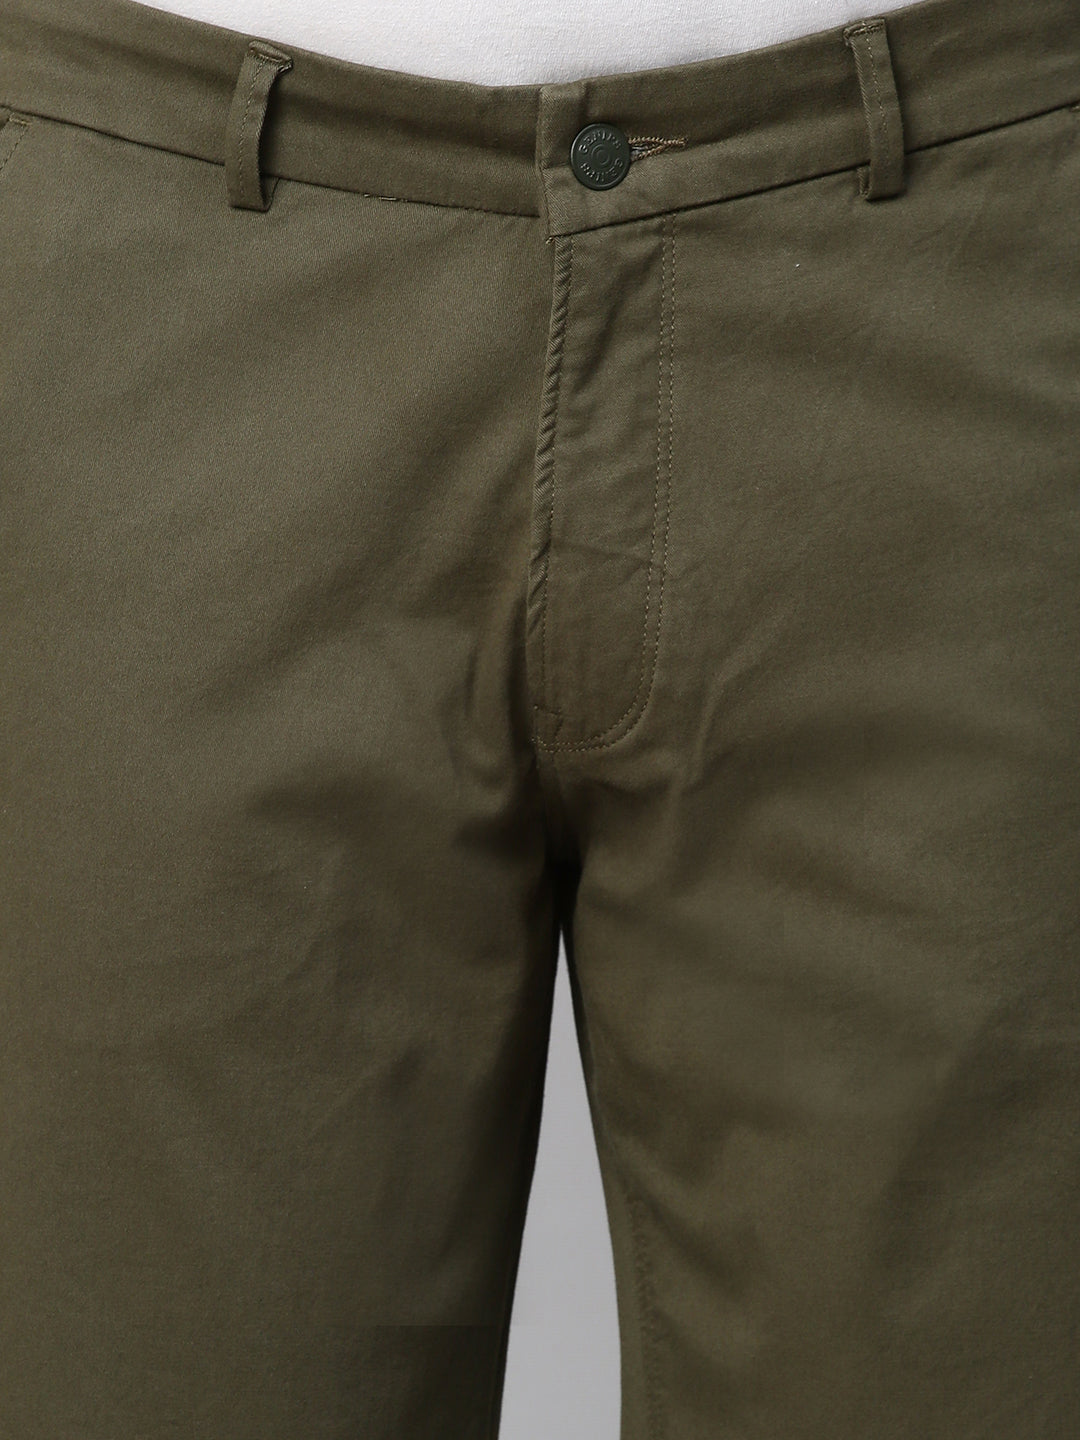 Genips Men's Green Cotton Lycra Slim Fit Shorts